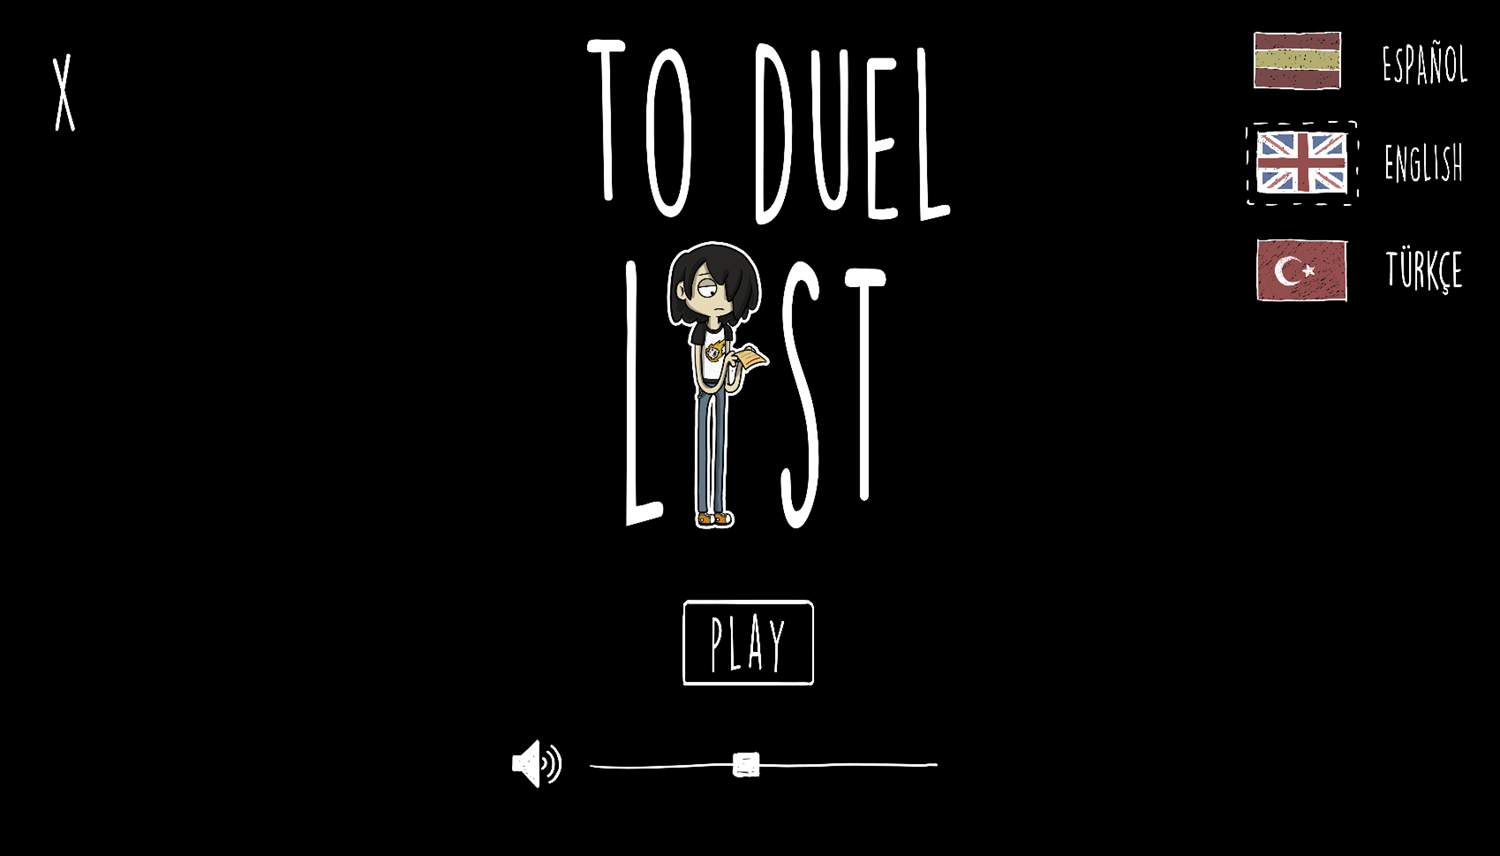 To Duel List Game Welcome Screen Screenshot.